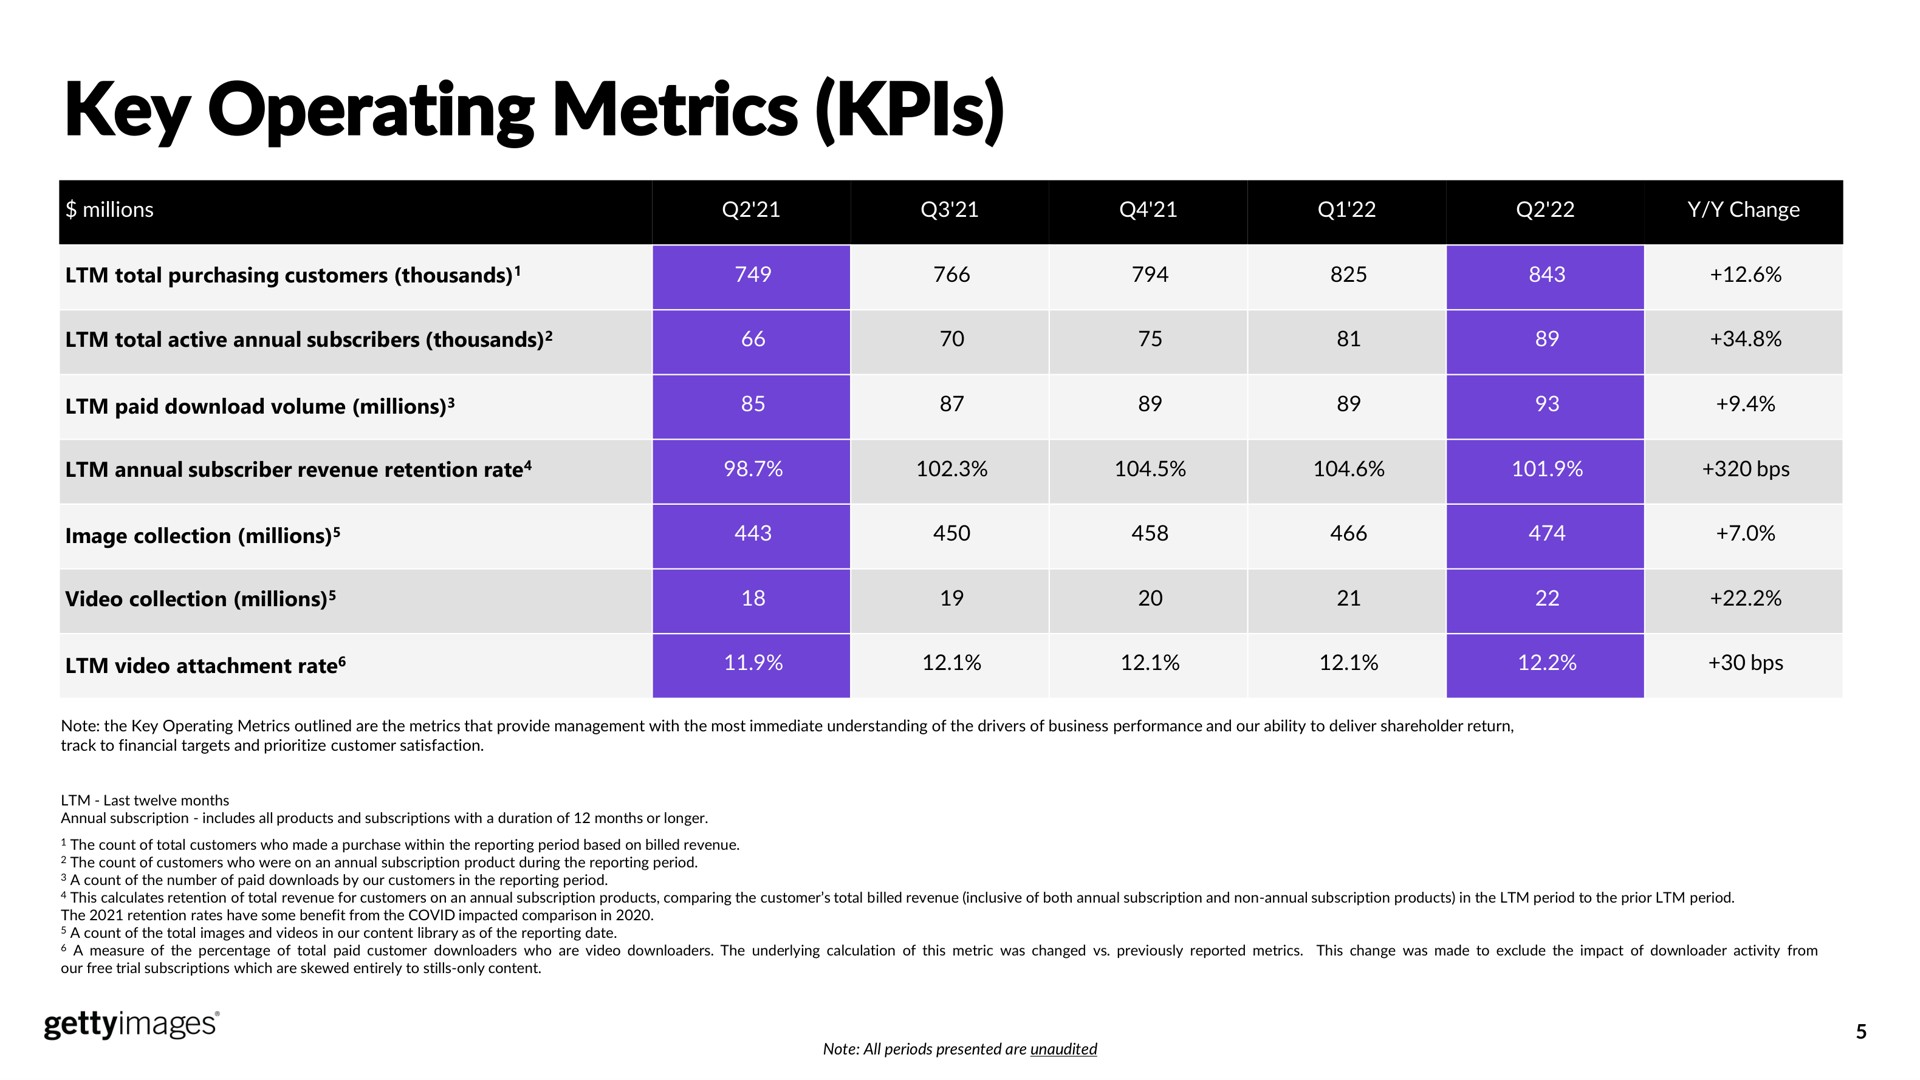 key operating metrics | Getty